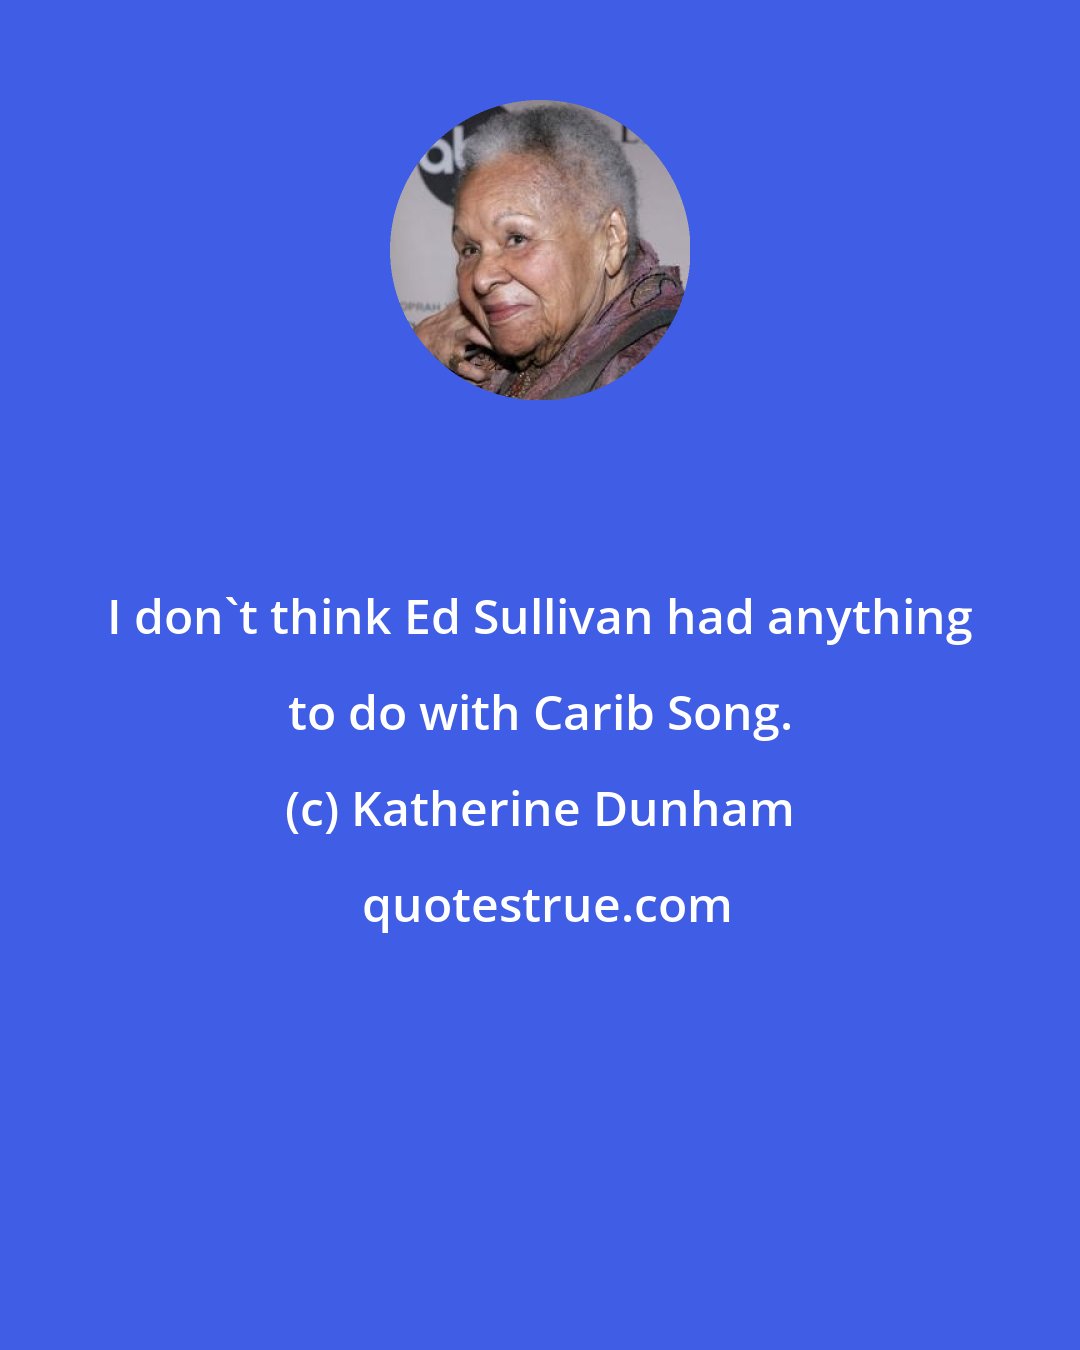 Katherine Dunham: I don't think Ed Sullivan had anything to do with Carib Song.